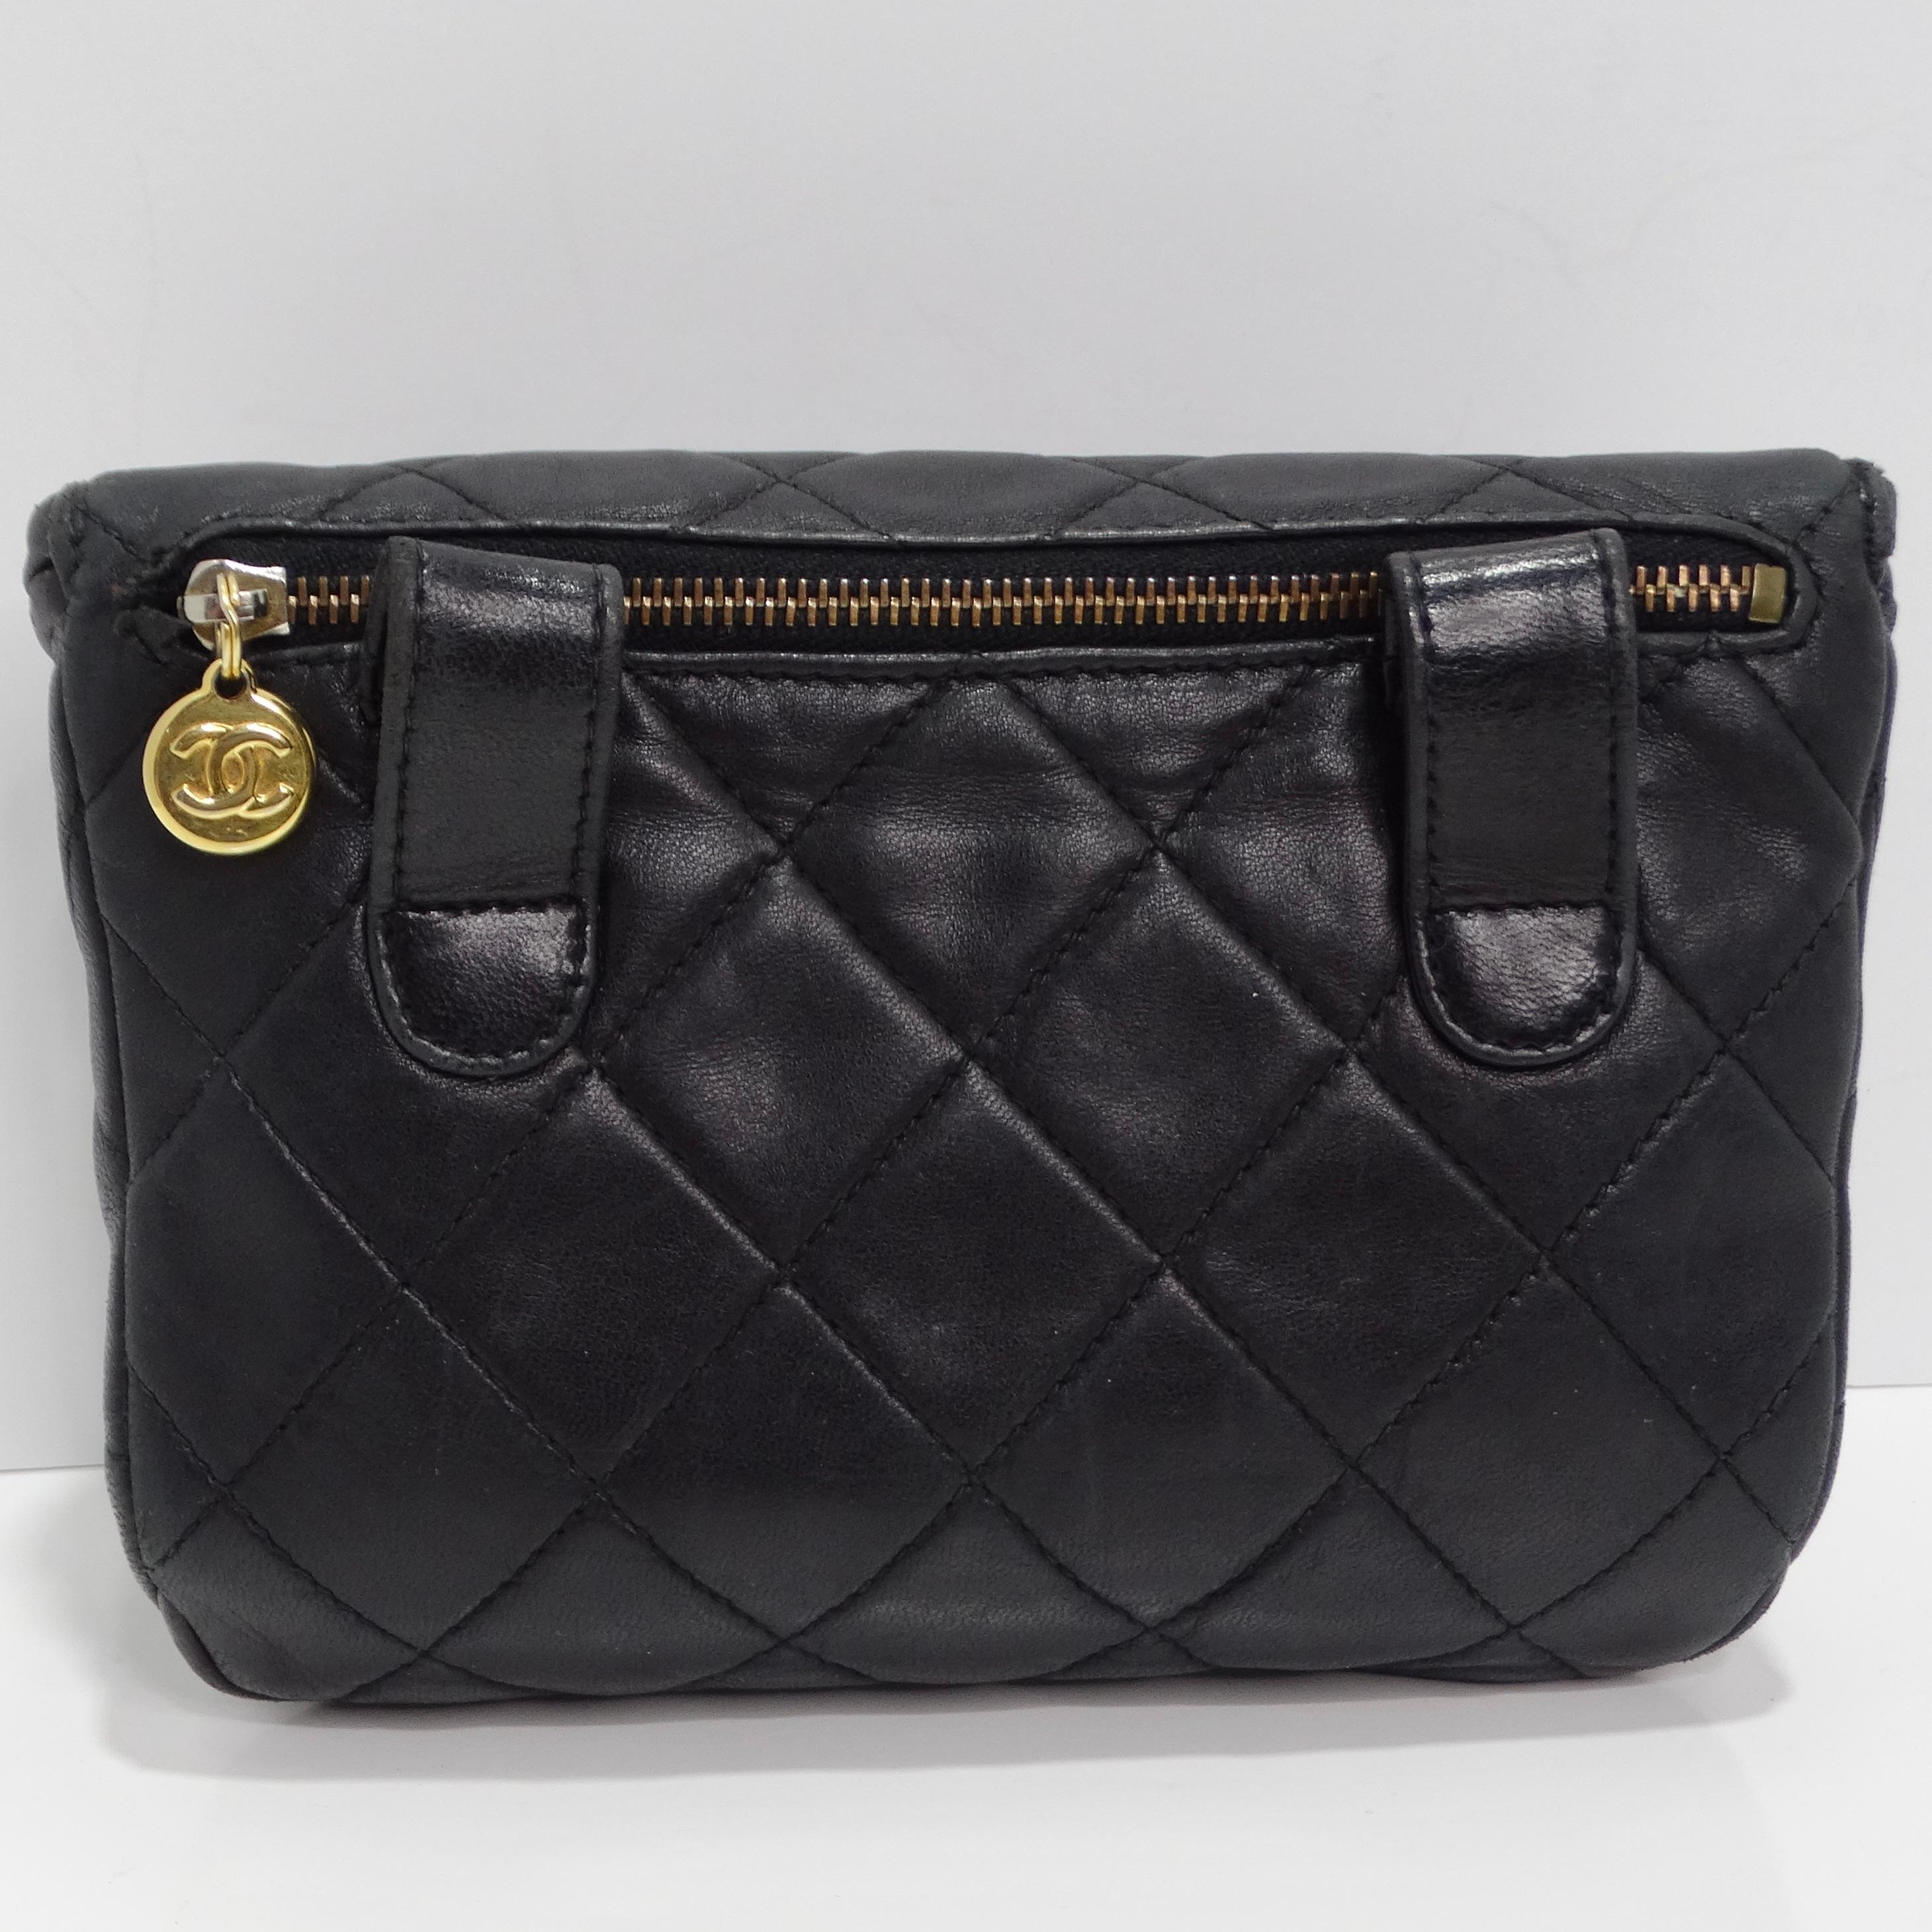 Chanel 1995 Black Caviar Leather Belt Bag 2